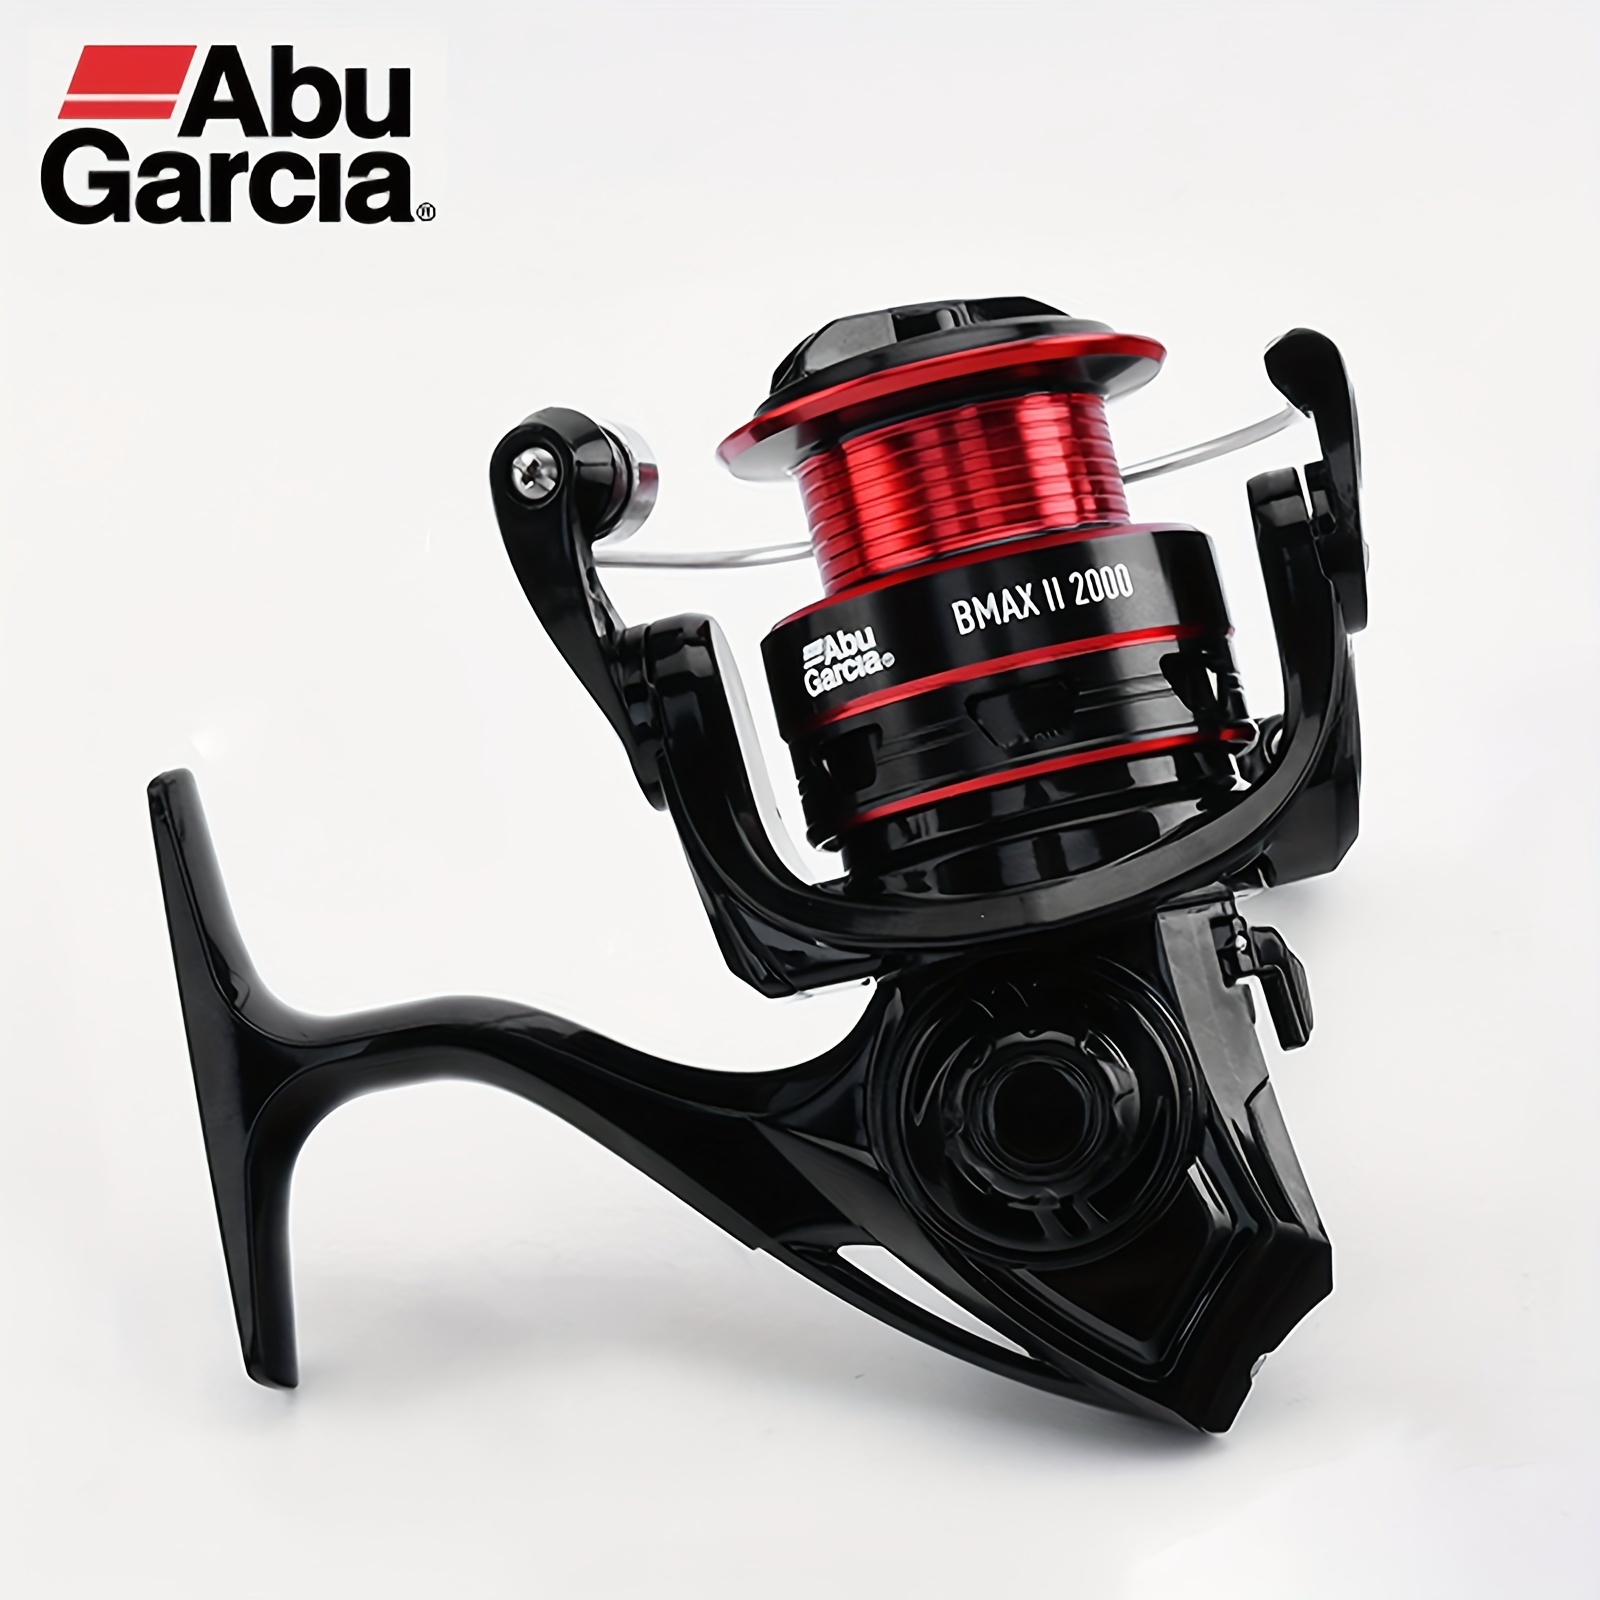 Abu Garcia Blackmax 40 Spin Abu Garcia Fishing Reels - BMAXSP40 +